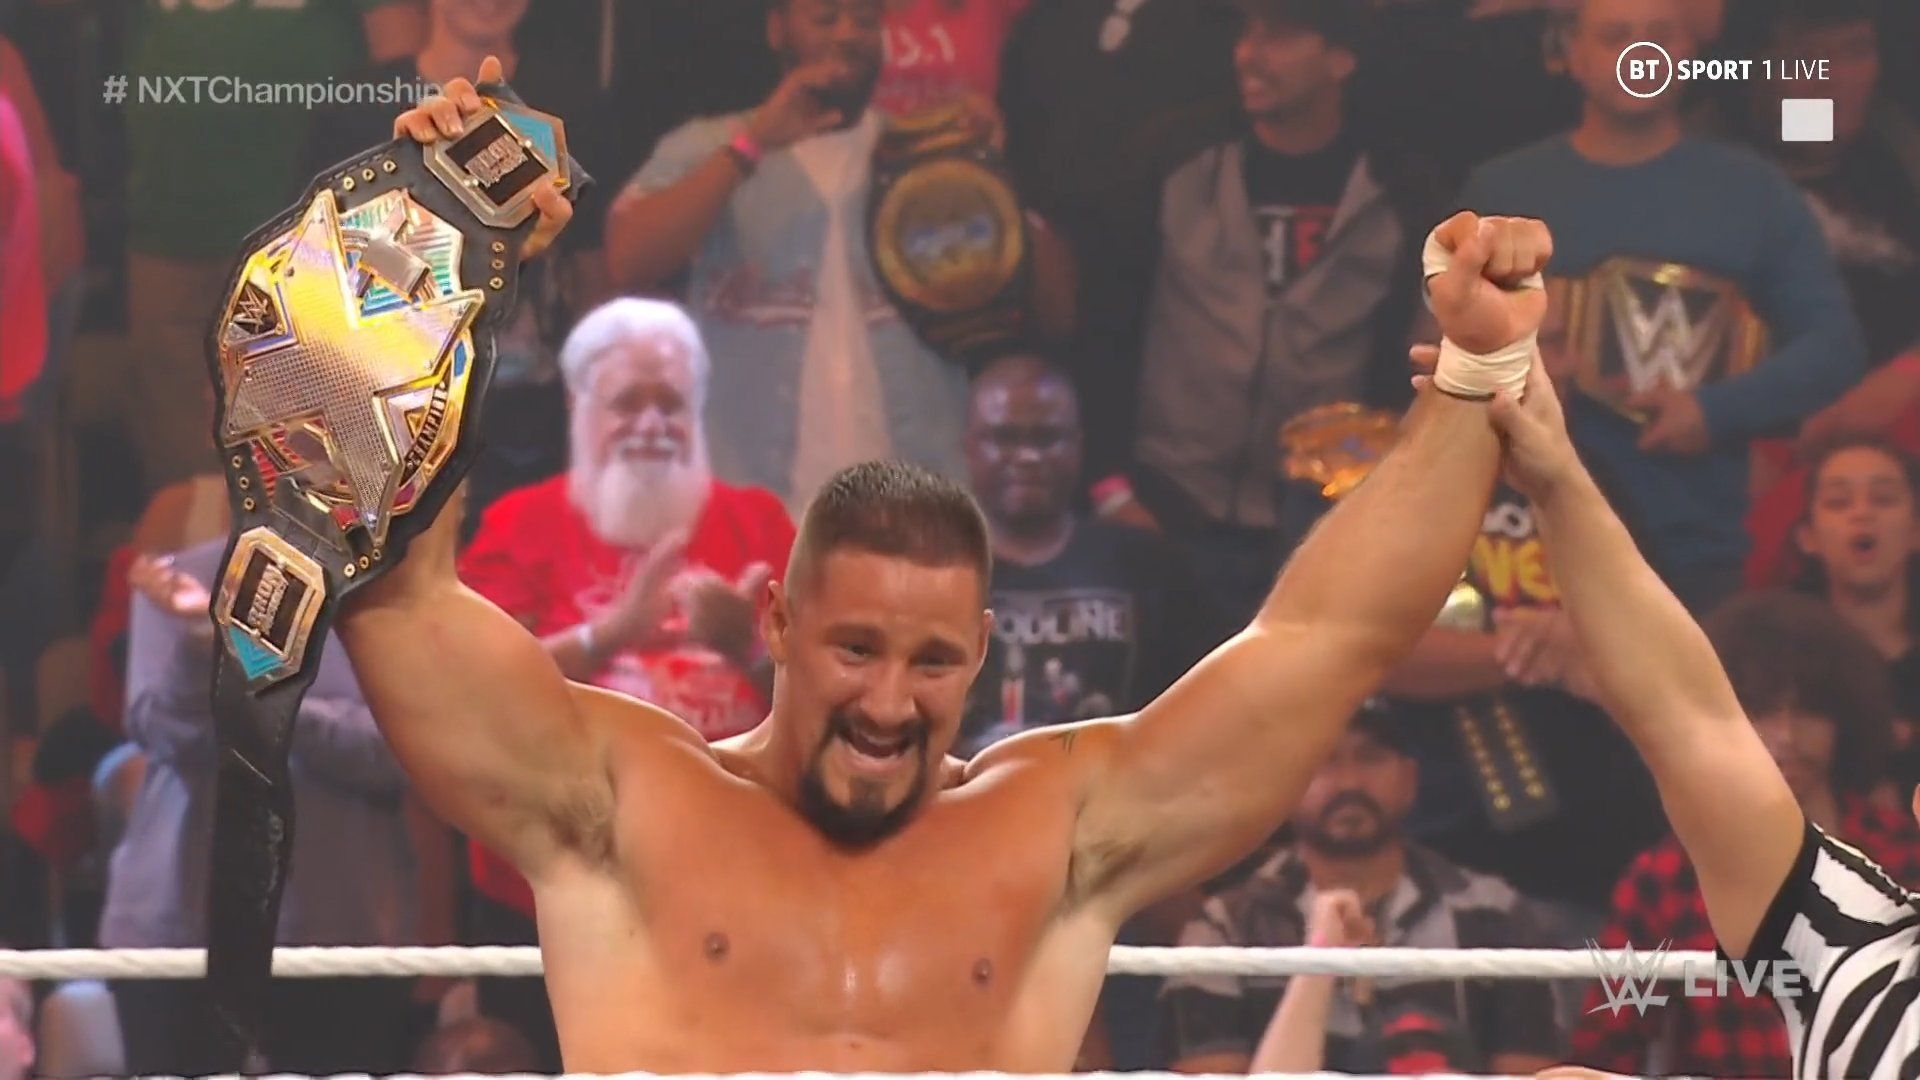 Bron Breakker is still the NXT Champion